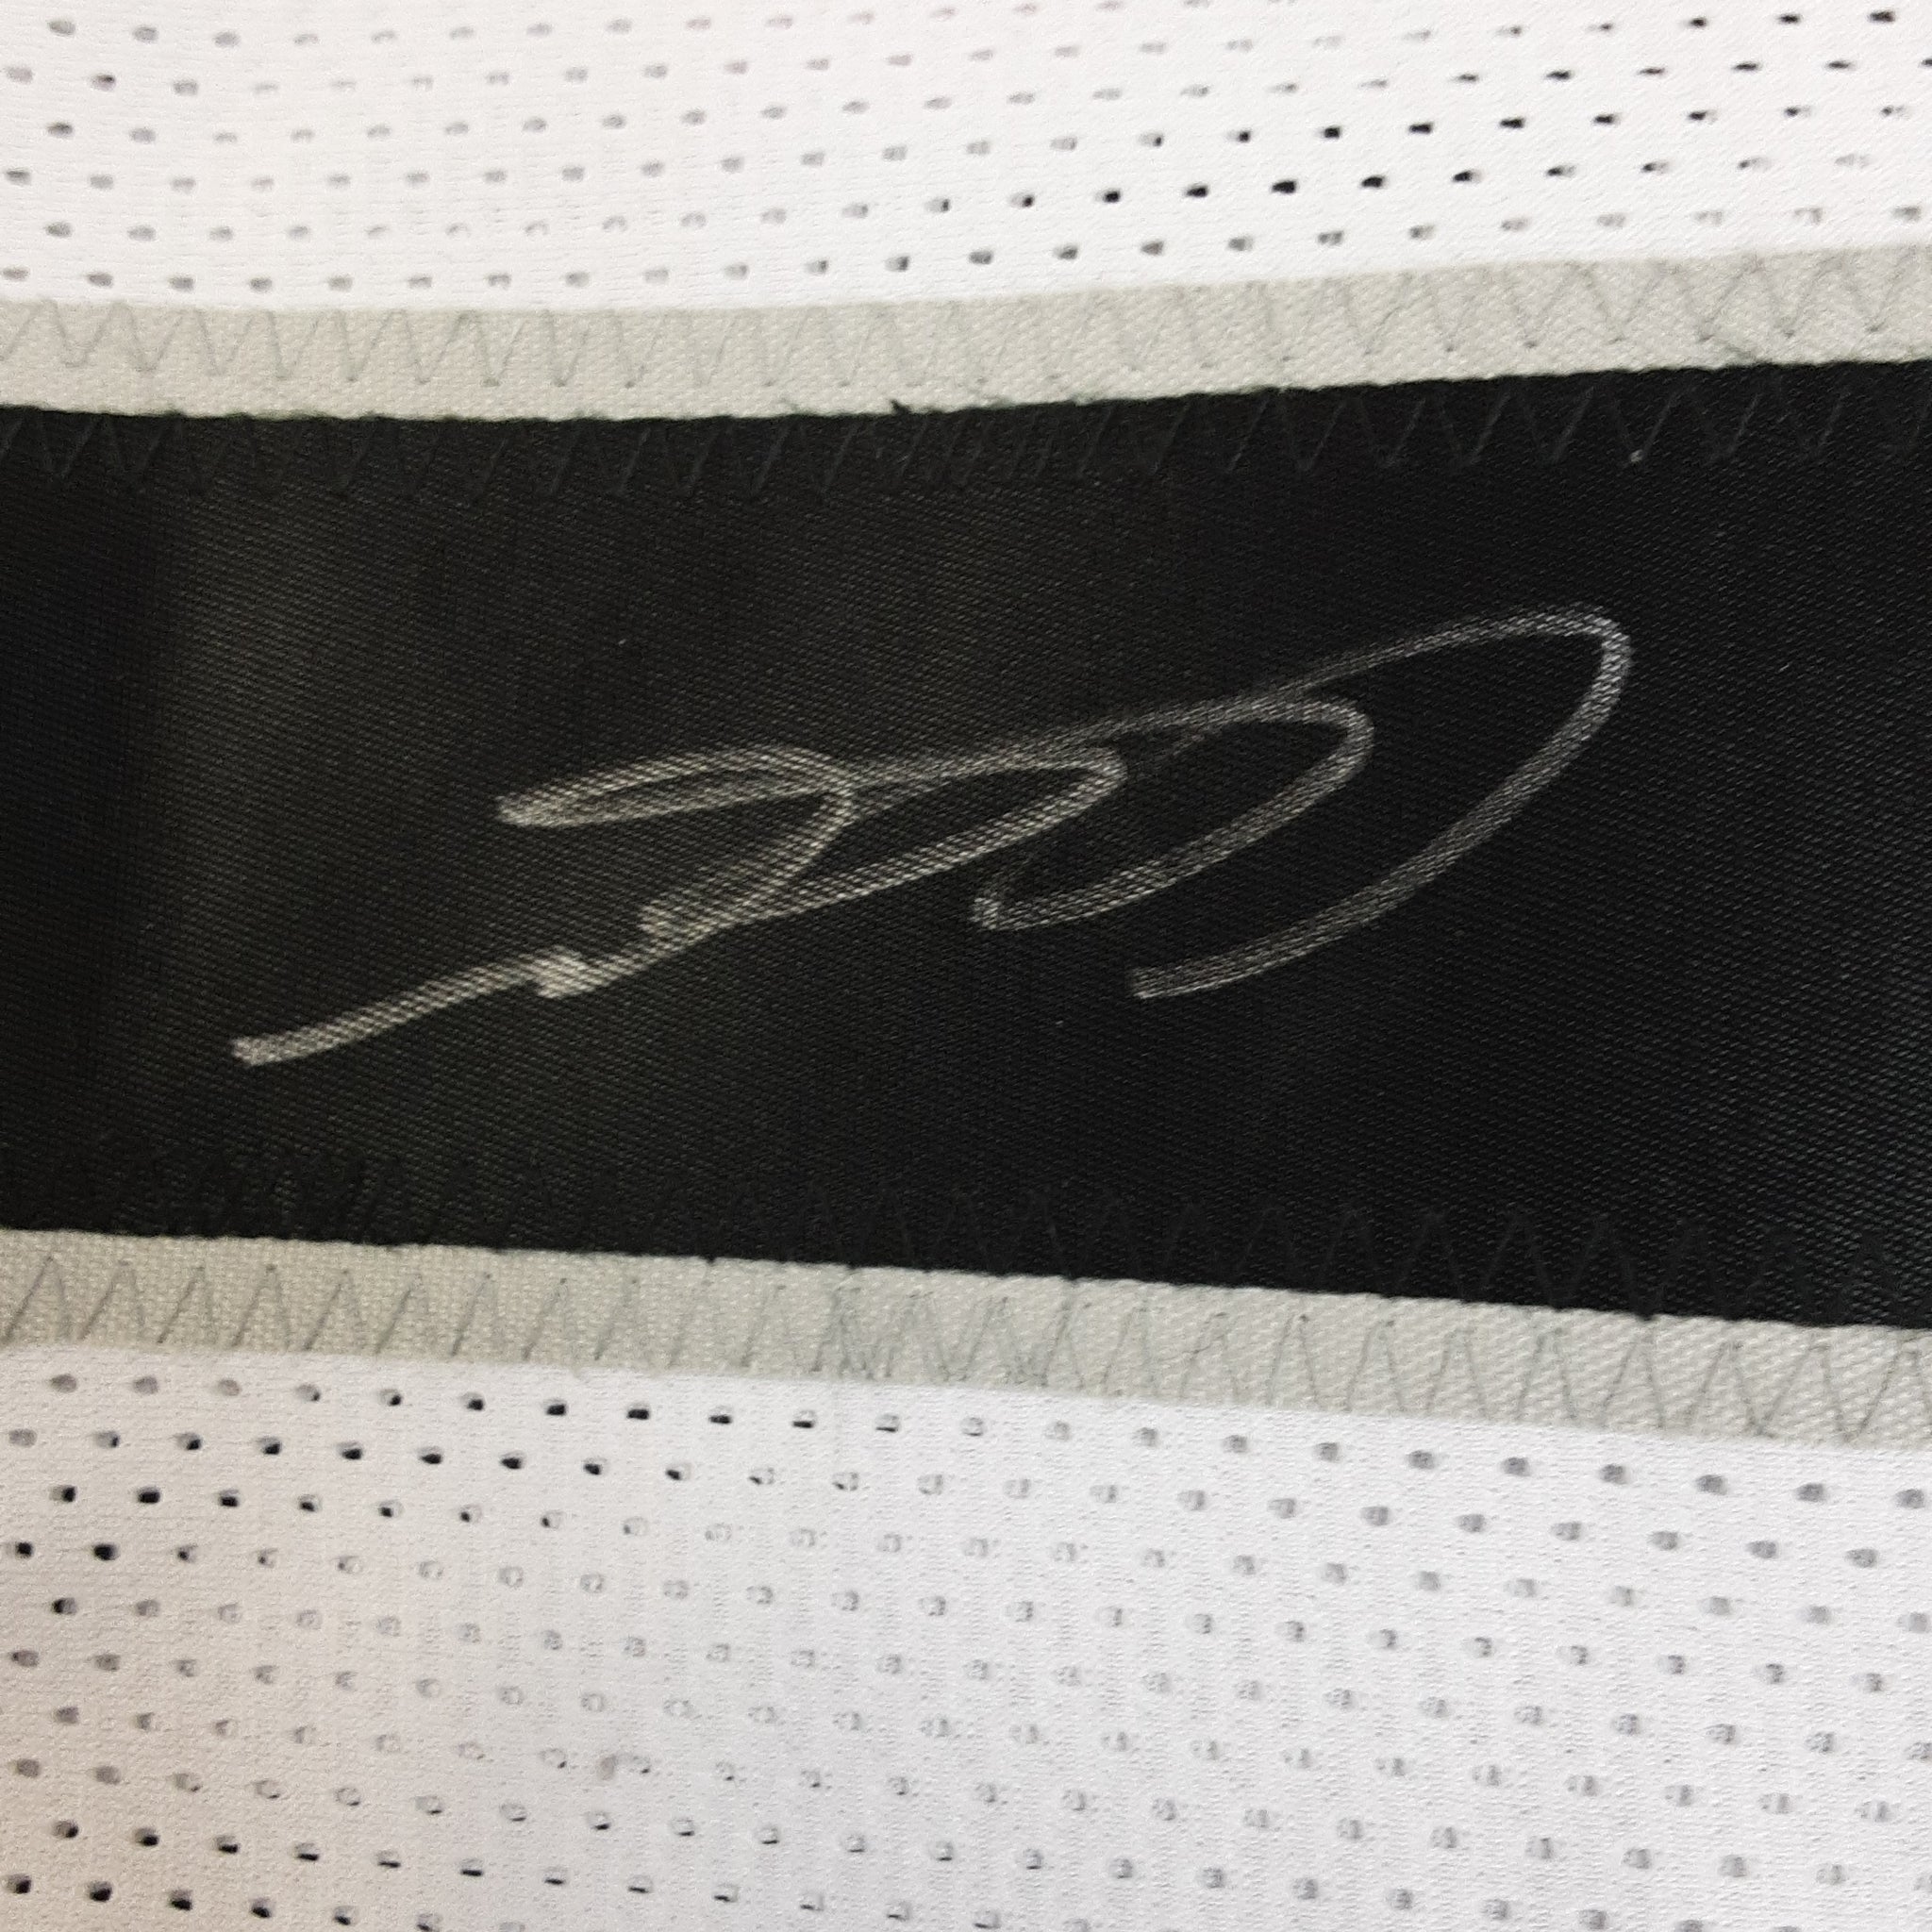 Desean Jackson Signed Pro Style Jersey Autographed JSA-